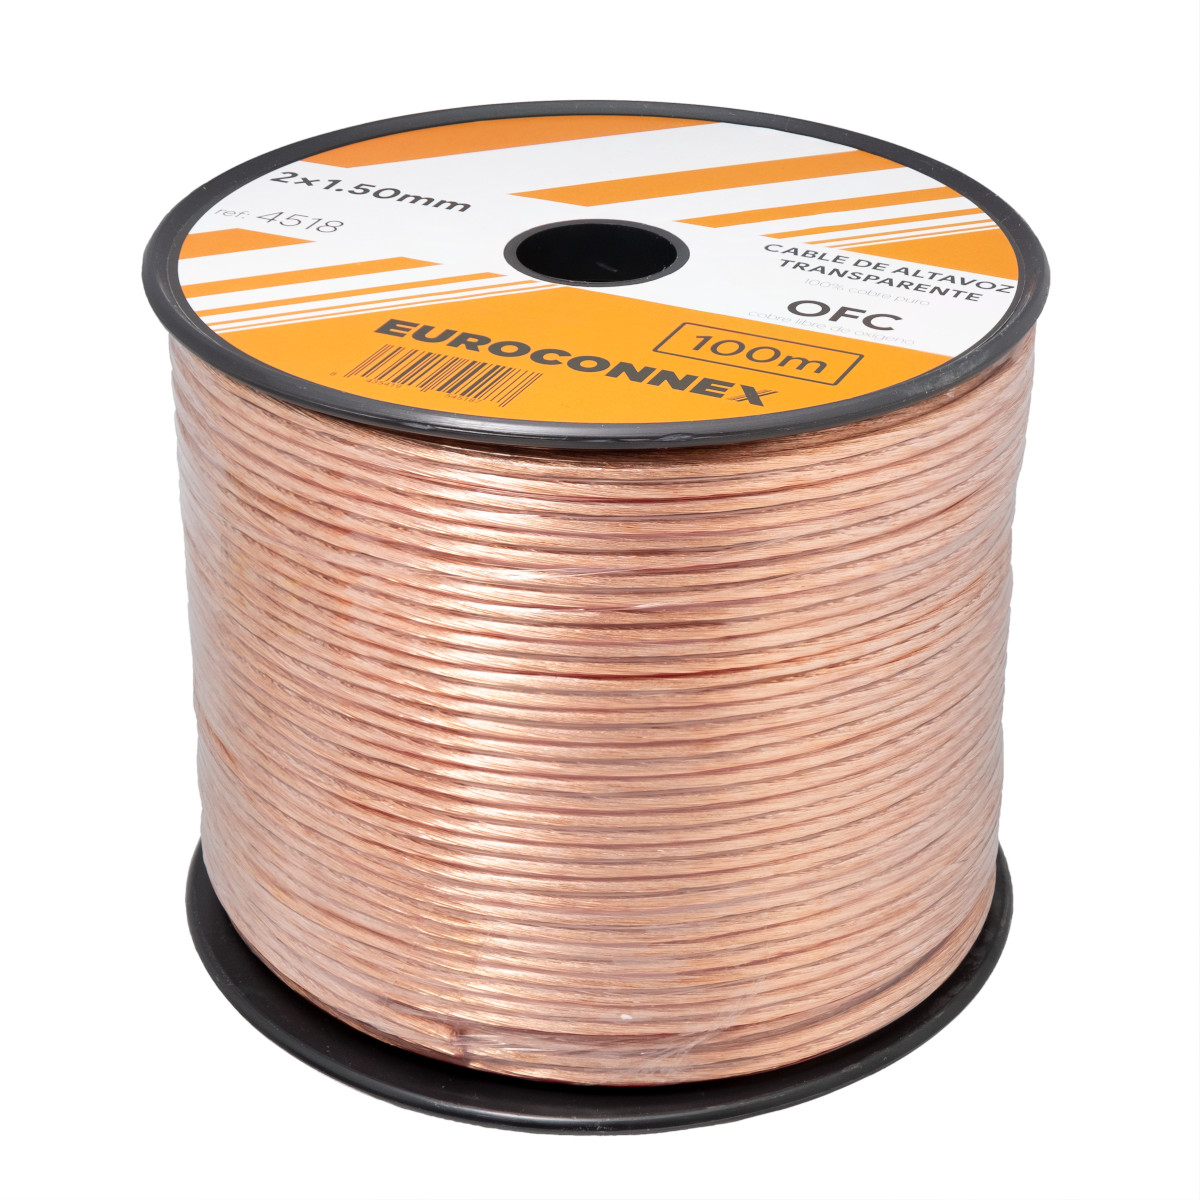 2x1.50mm² Trasnparent Speaker Cable, OFC Bare Copper, 100m